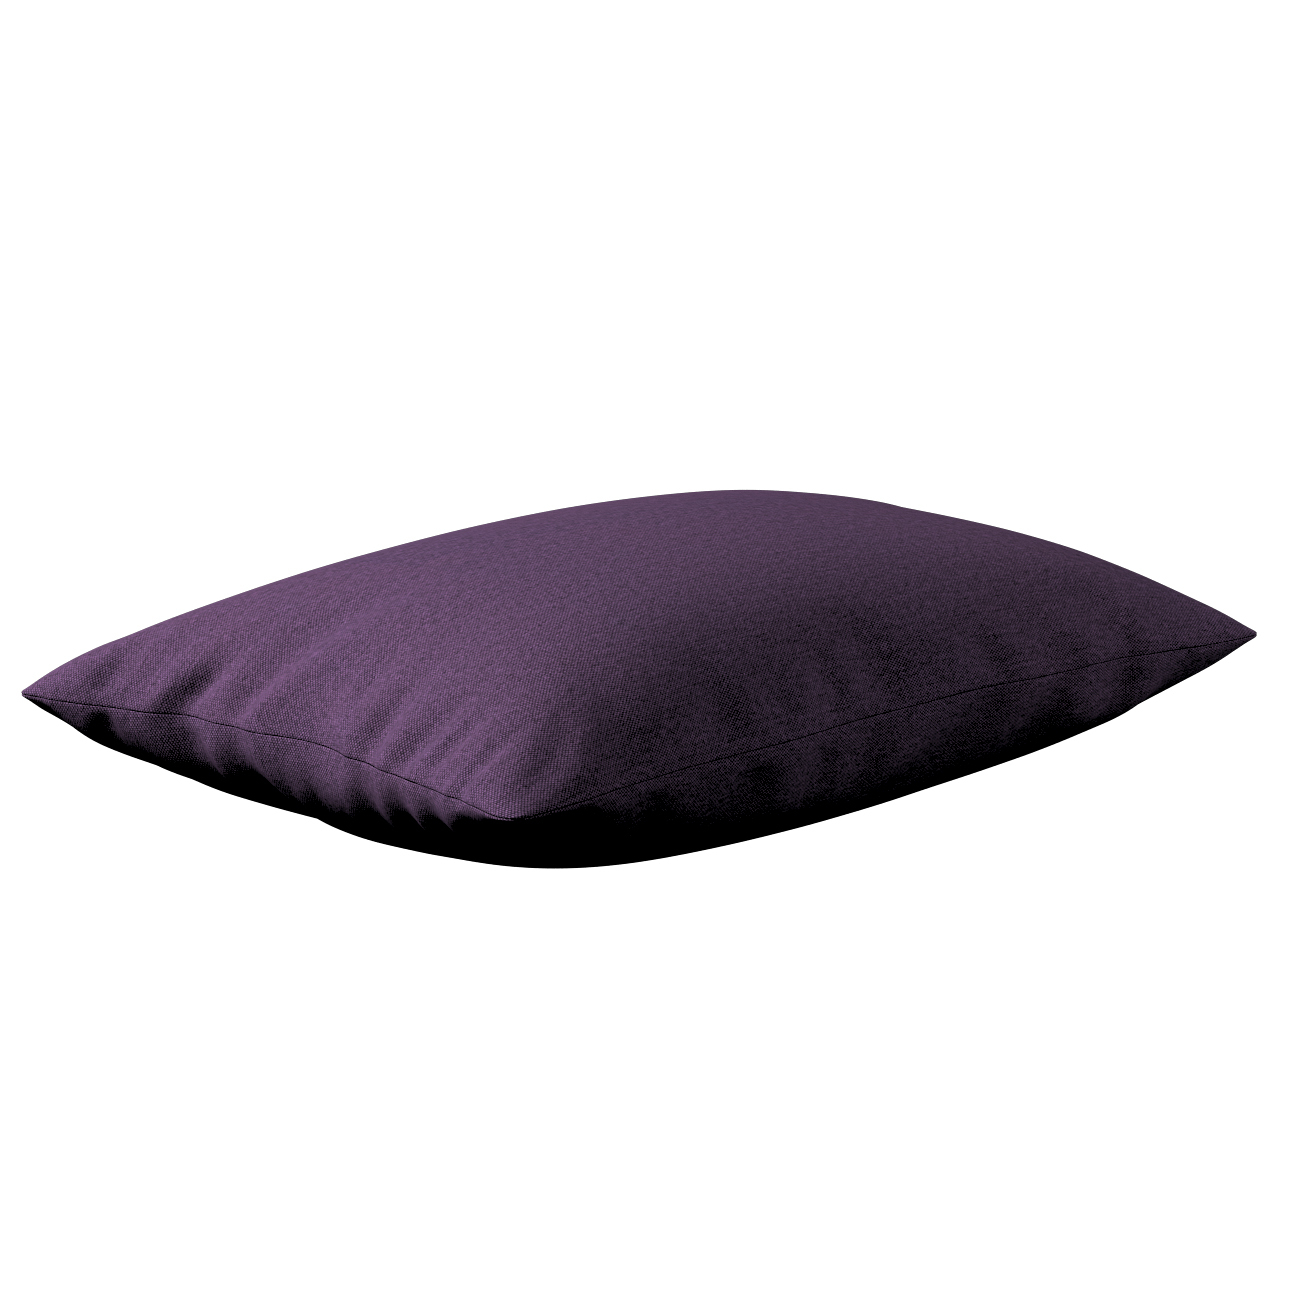 Kissenhülle Kinga rechteckig, violett, 47 x 28 cm, Etna (161-27) günstig online kaufen